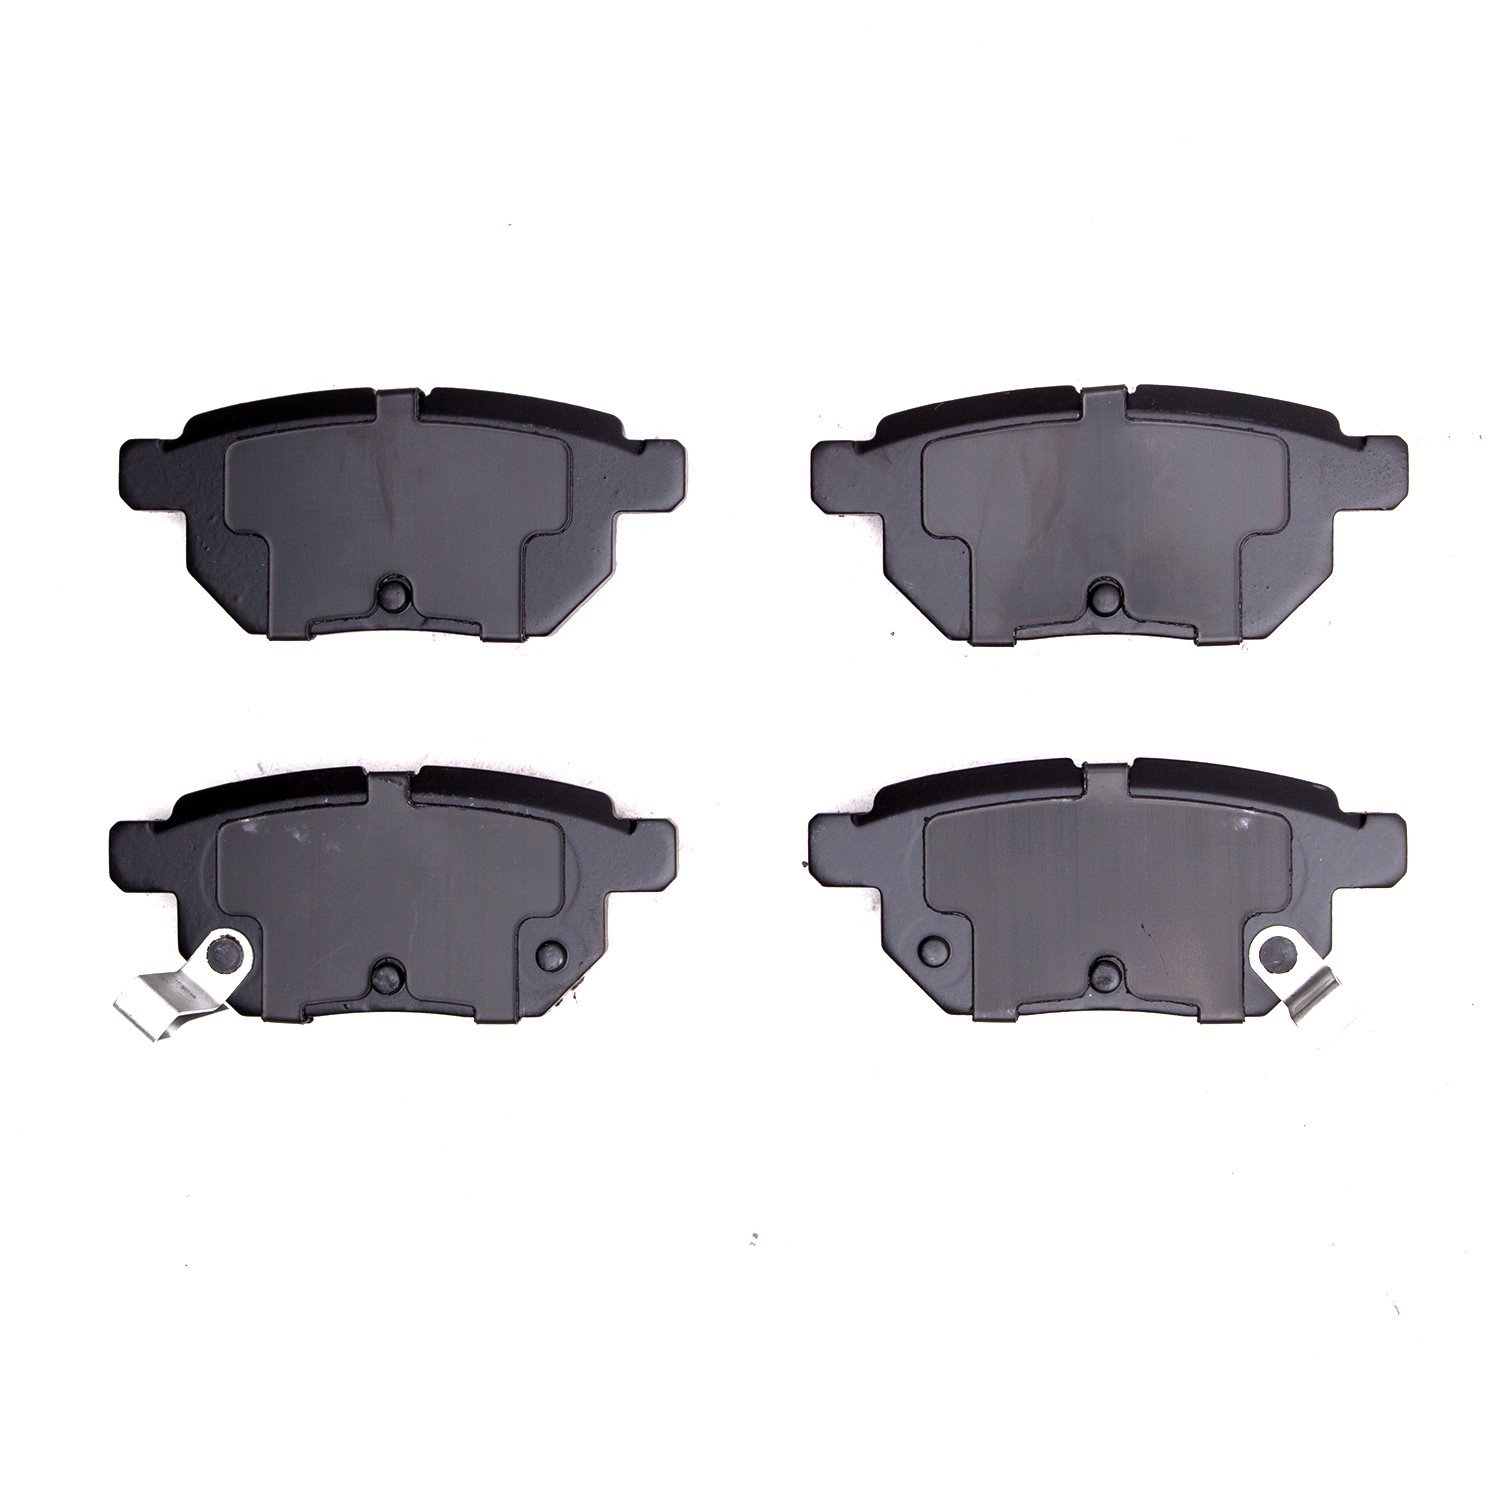 1310-1423-00 3000-Series Ceramic Brake Pads, Fits Select Multiple Makes/Models, Position: Rear